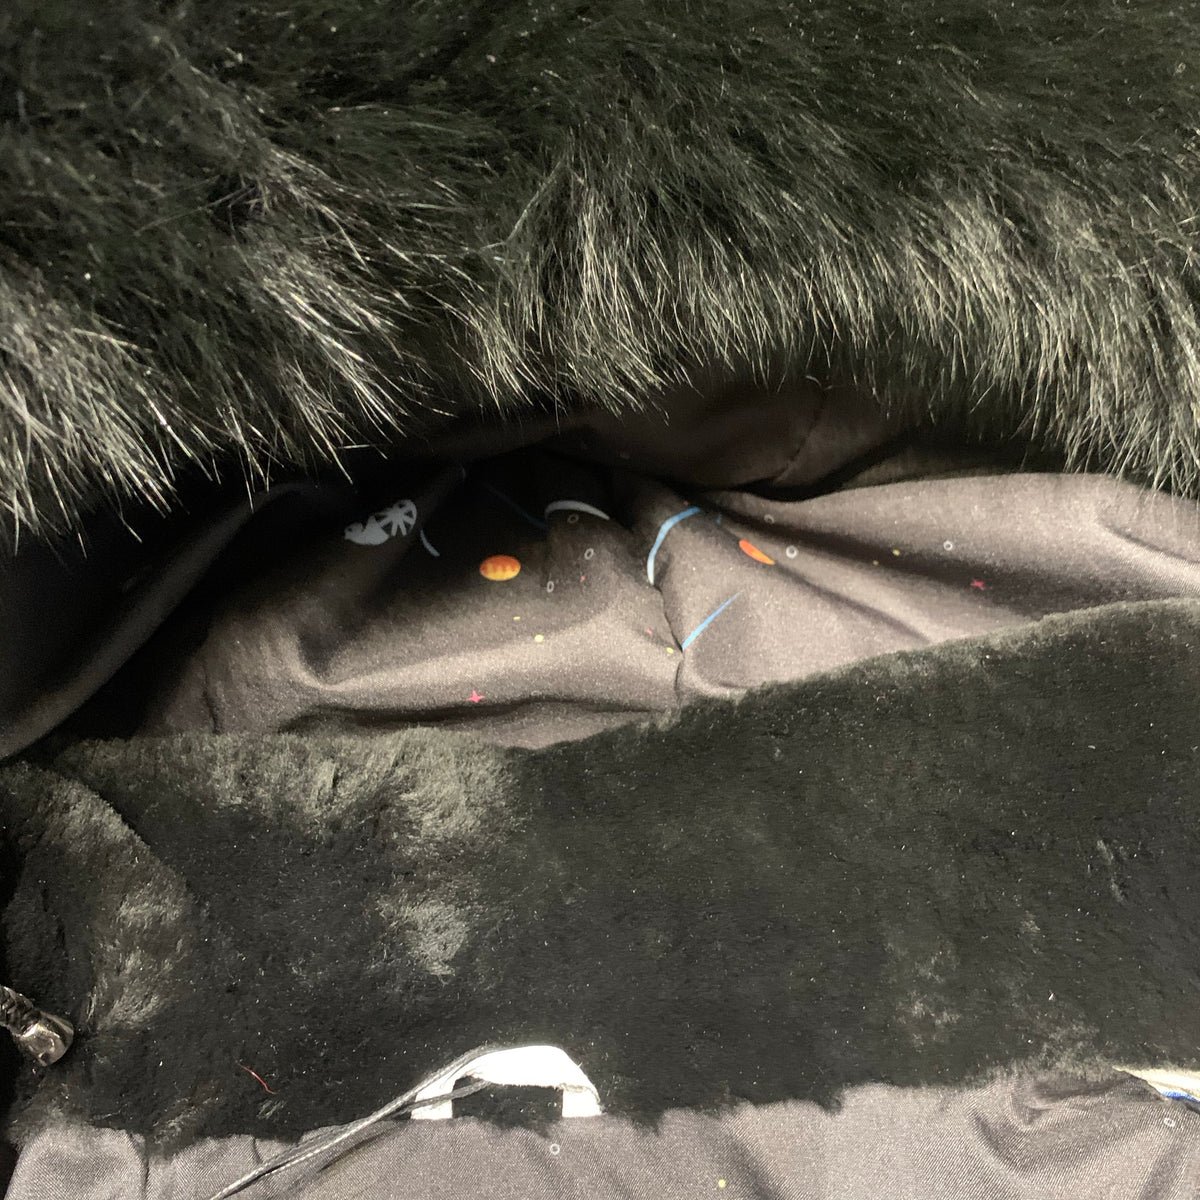 Barya NewYork White Quilted Lambskin Black Fox Fur Hooded Bomber Jacket - Dudes Boutique